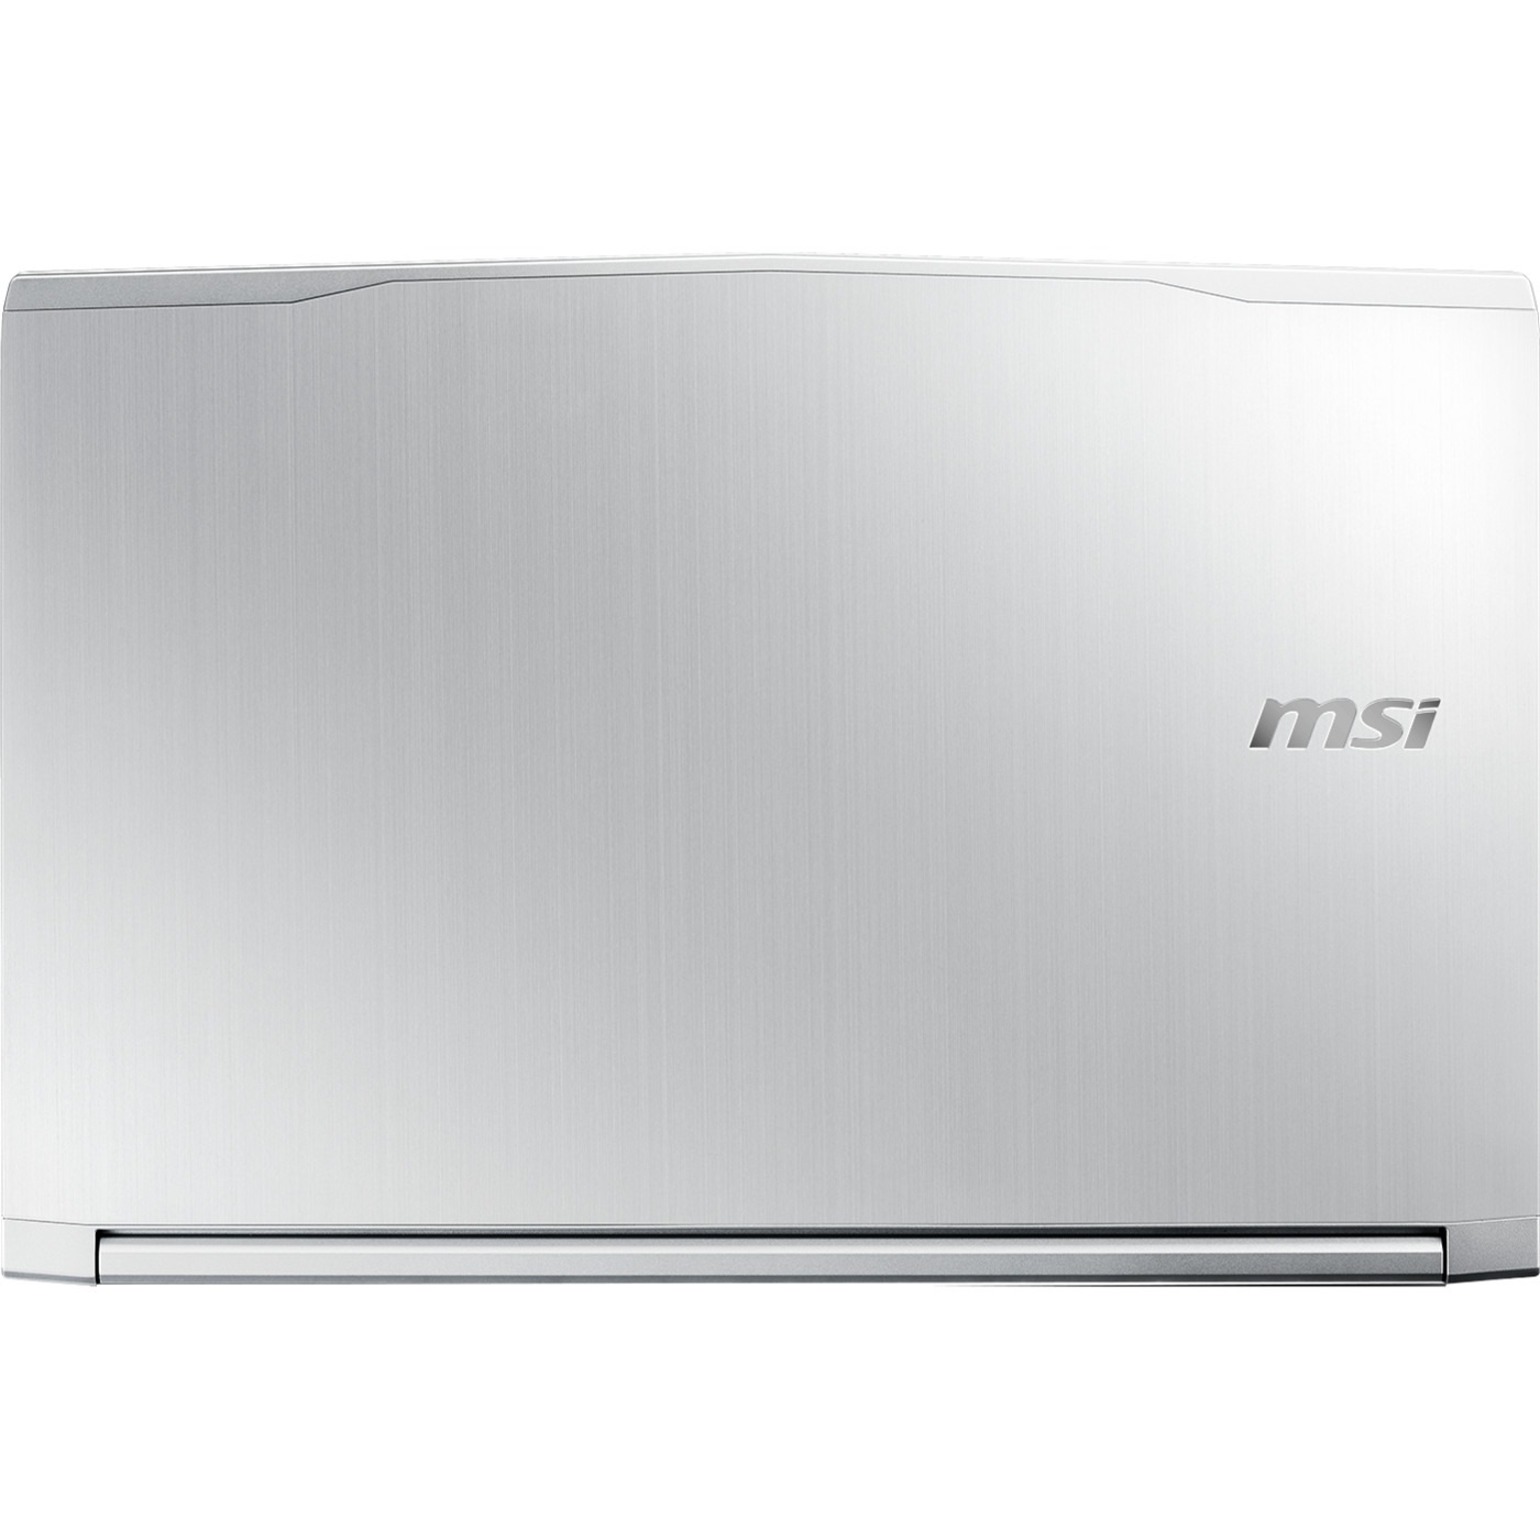 MSI 15.6" Full HD Laptop, Intel Core i7 i7-6700HQ, 1TB HD, DVD Writer, Windows 10, PE60 6QE-031US - image 5 of 7